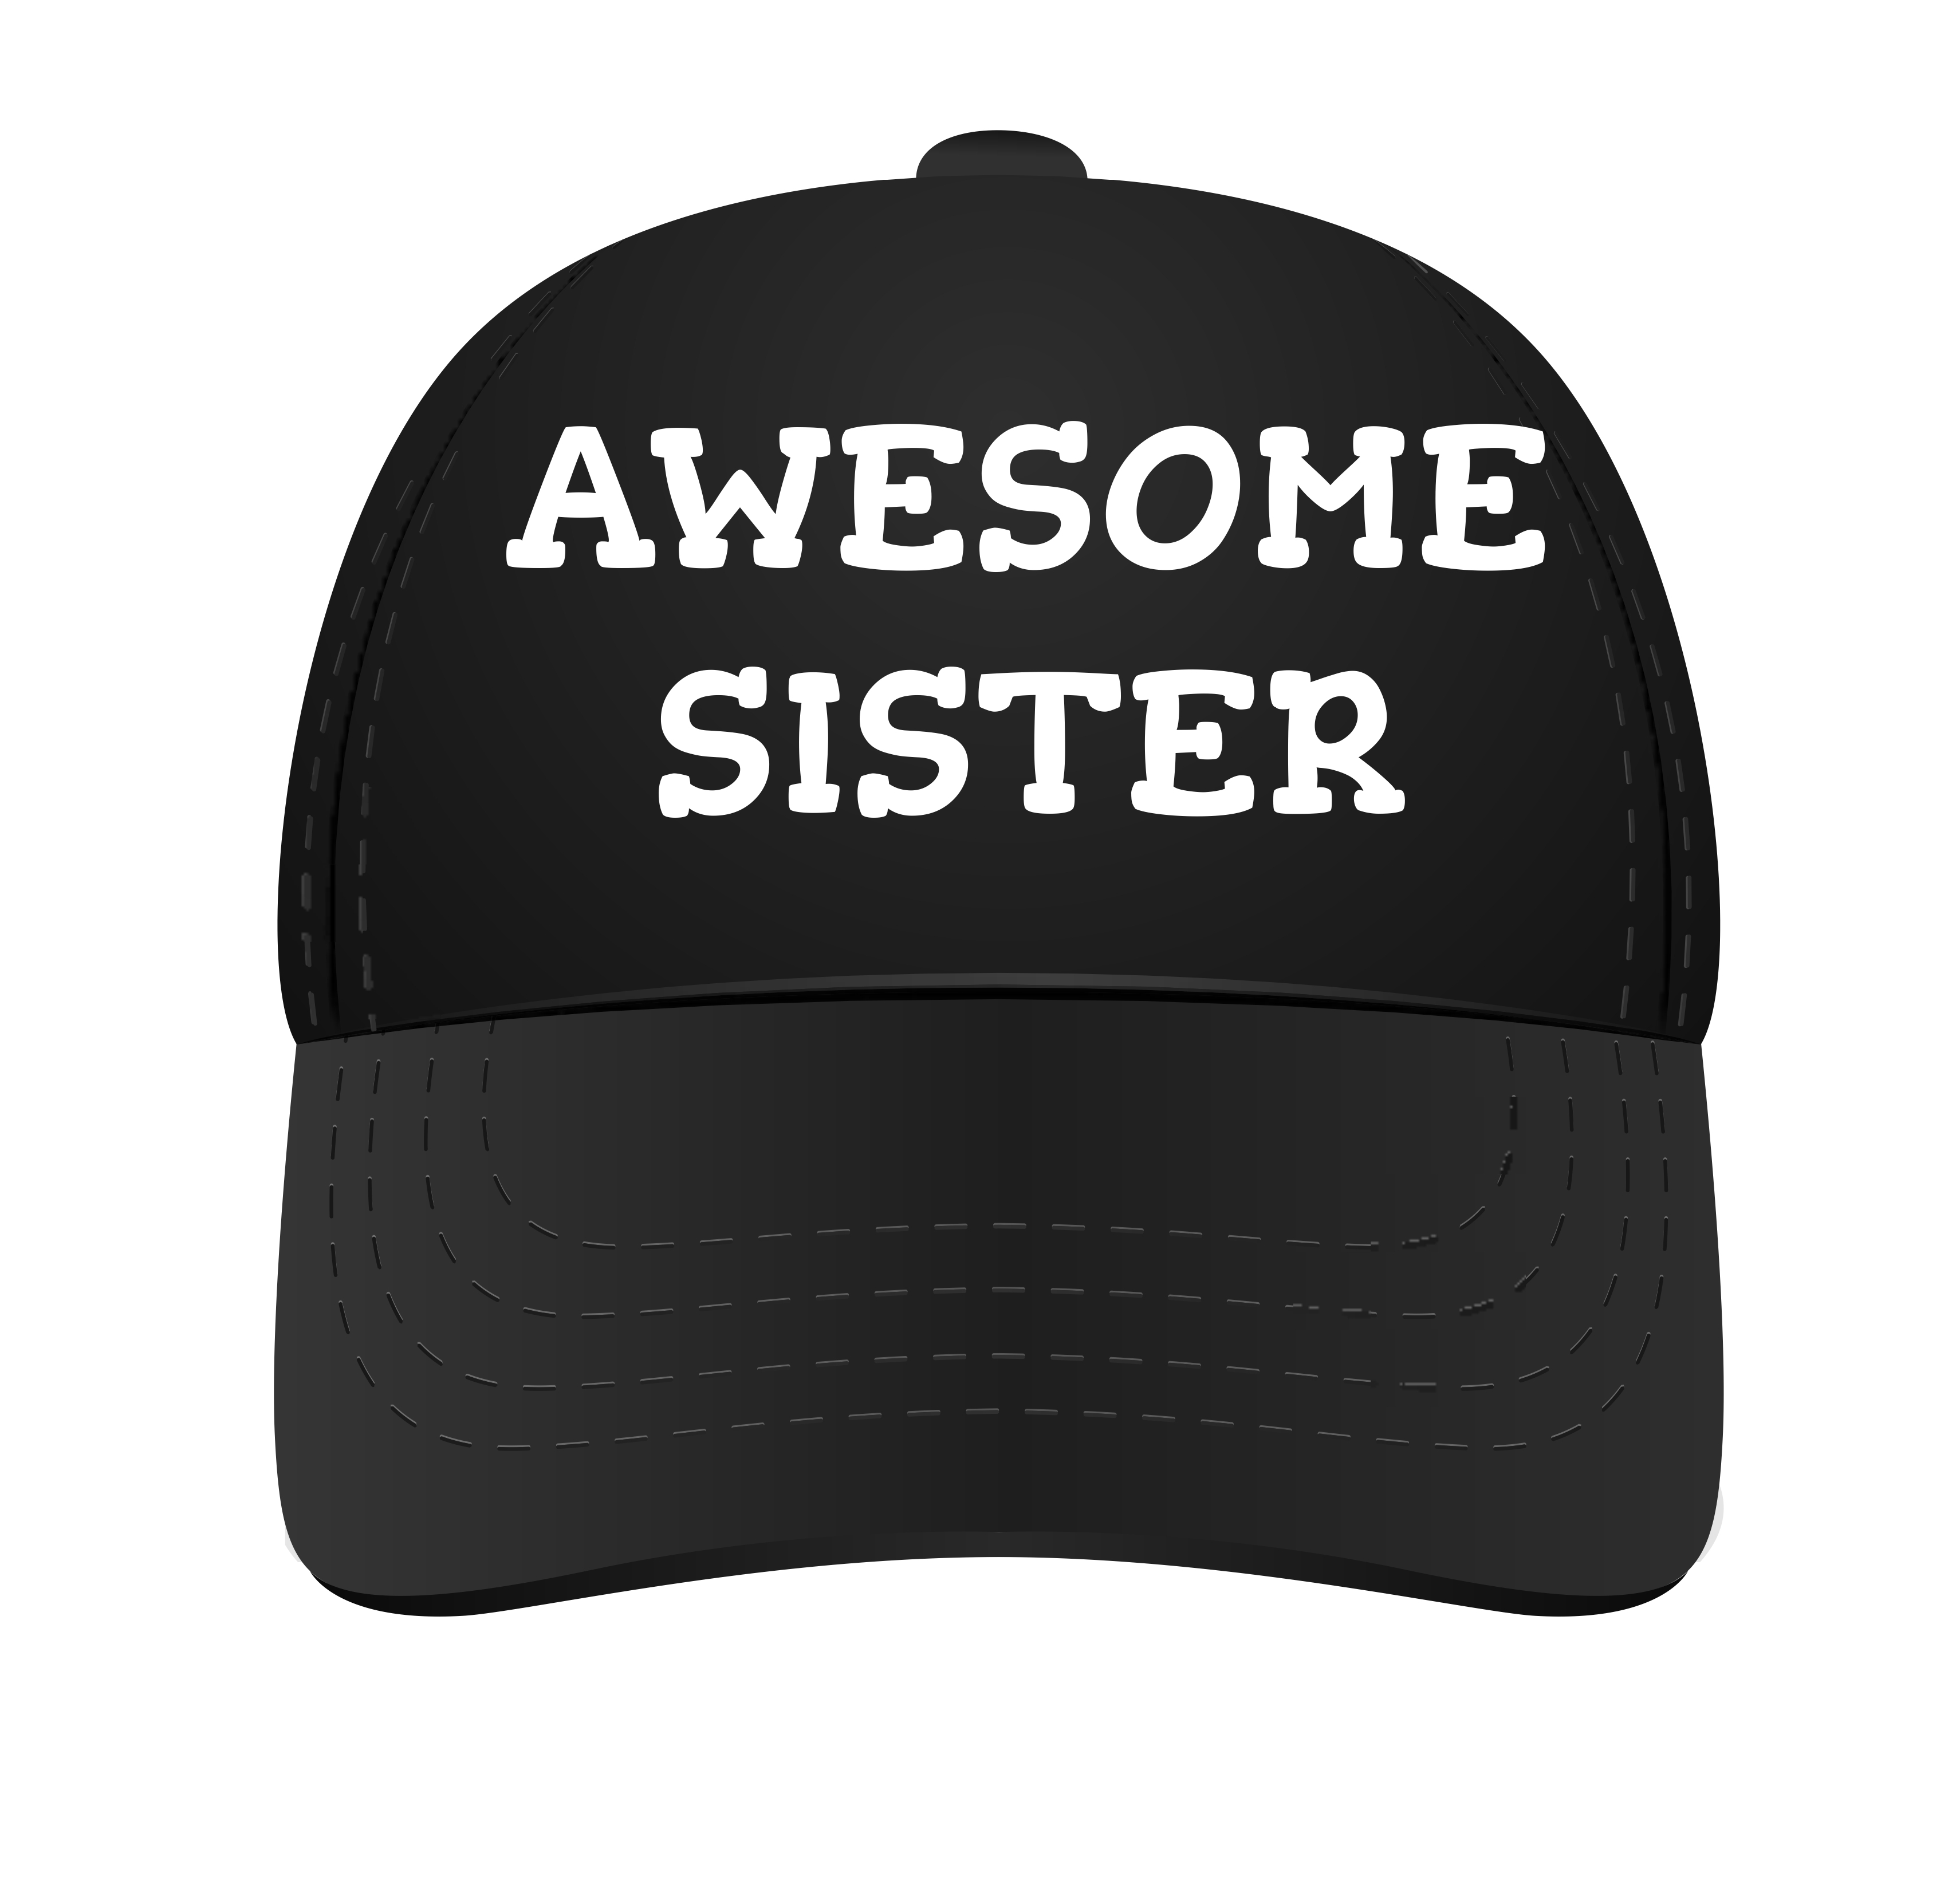 Pet Awesome sister geweldige zus cap